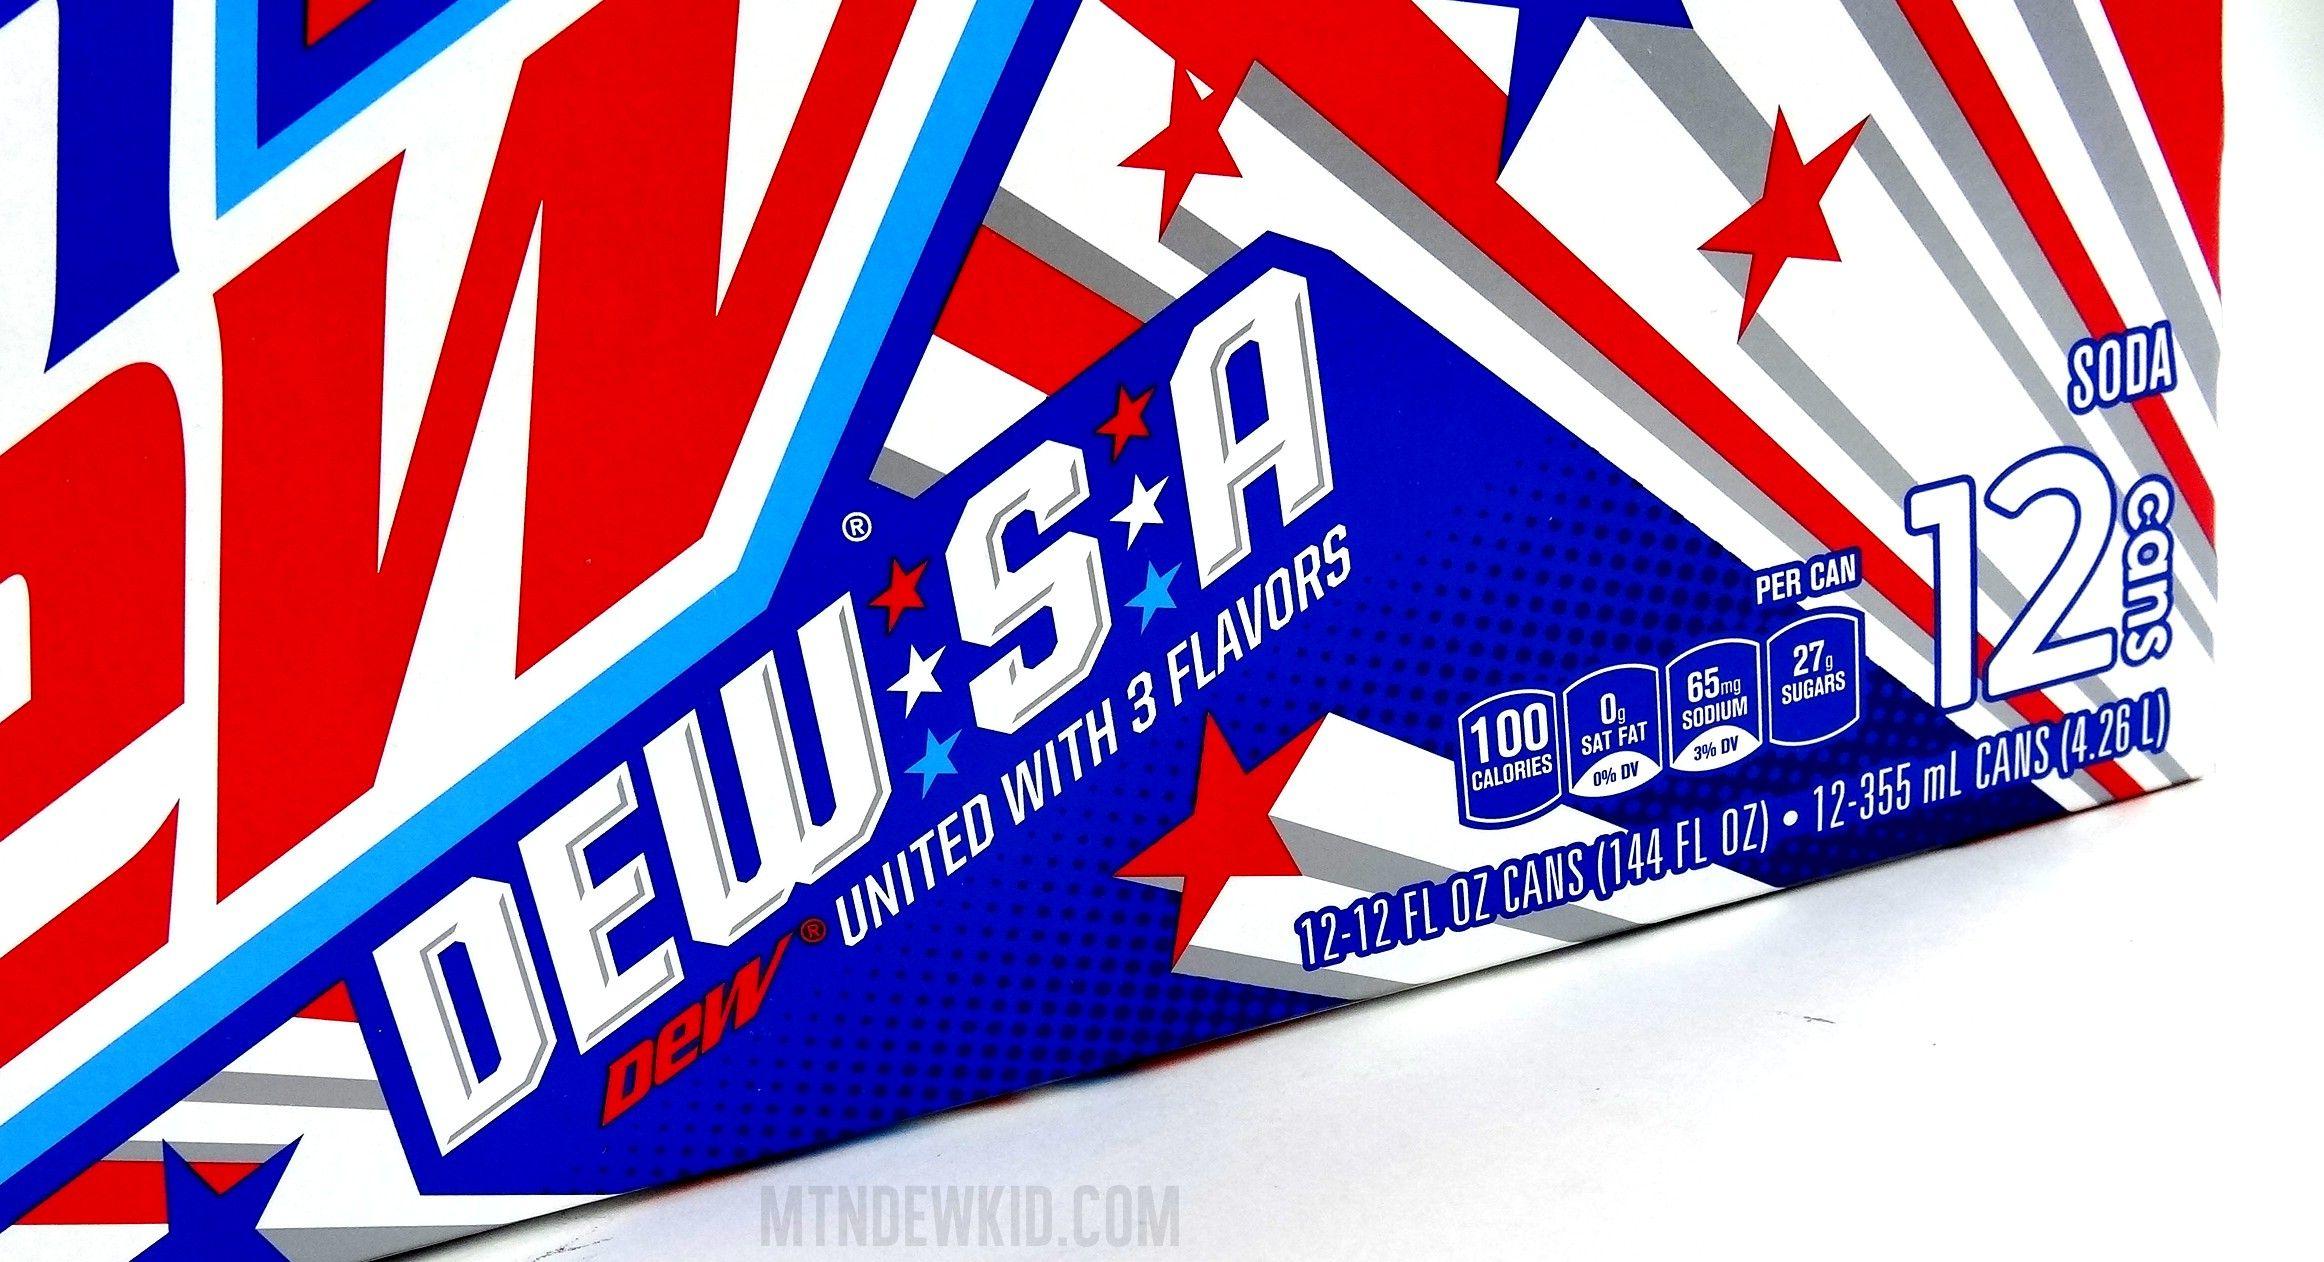 Mtn Dew SA Logo - A Look at Mtn Dew's DewSA Graphics | Mtn Dew Kid